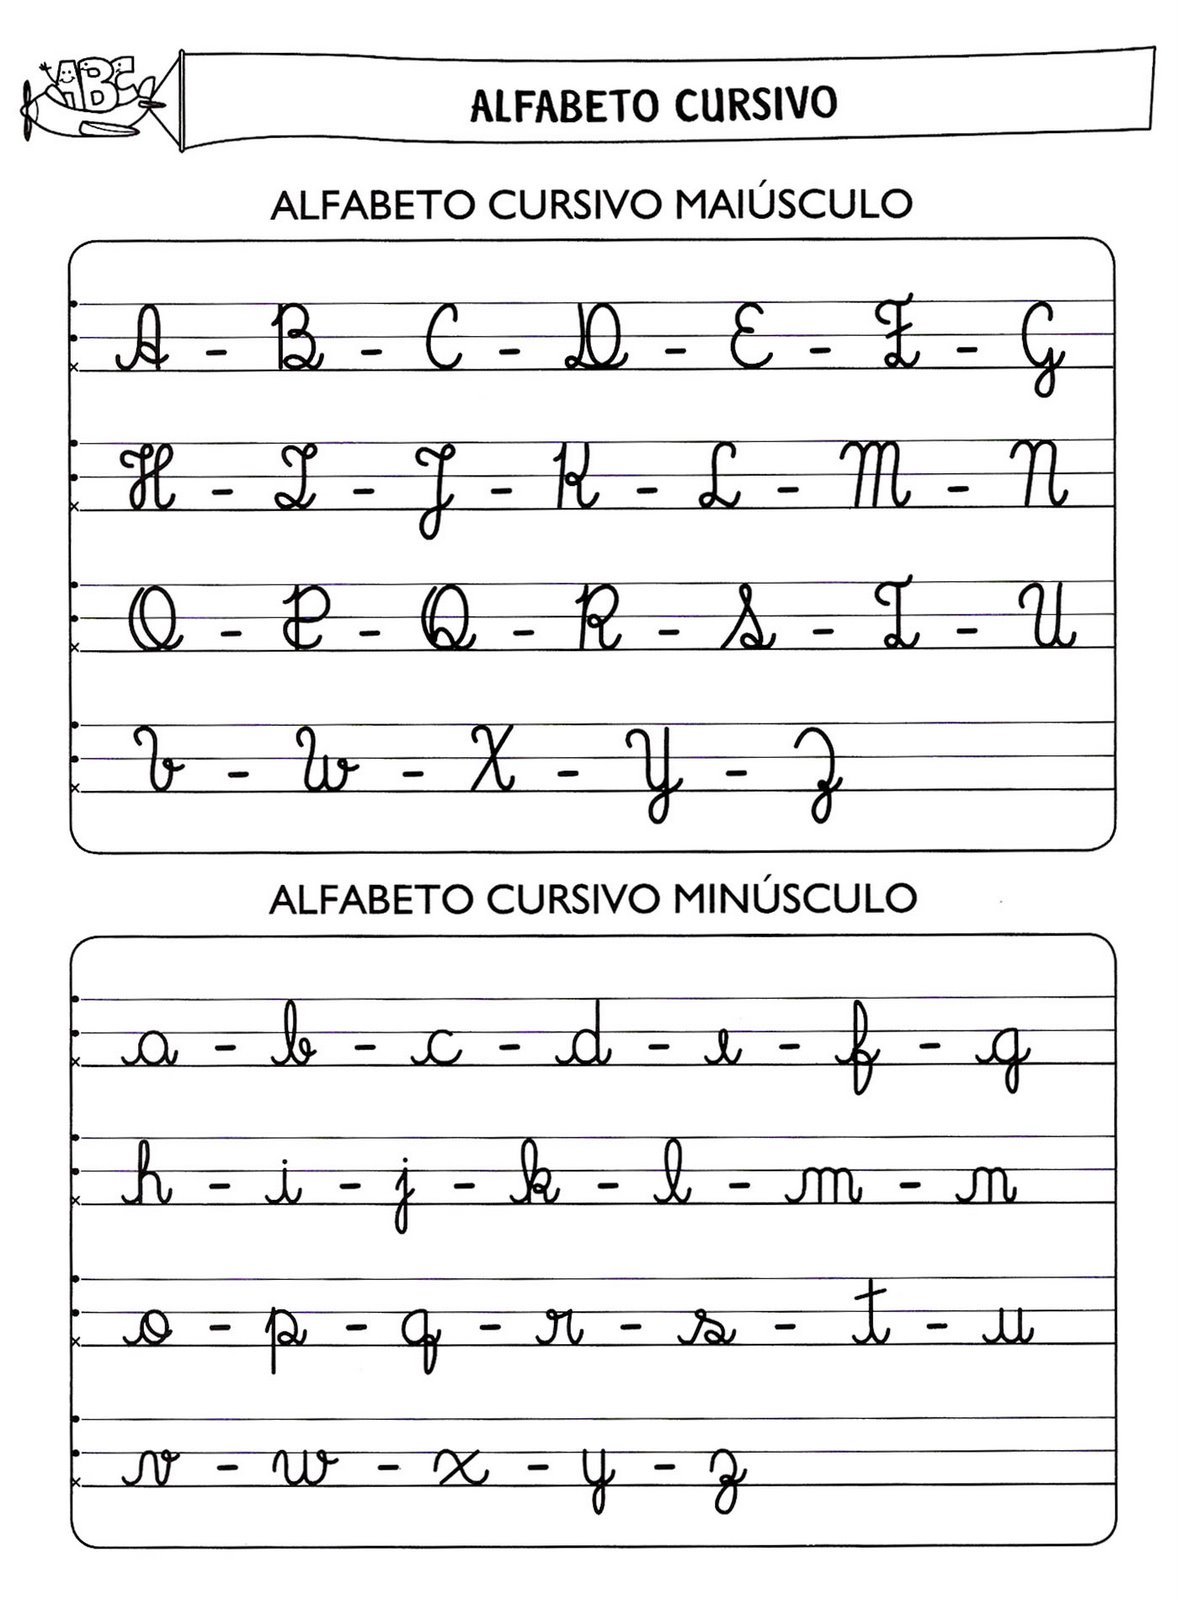 www.ensinar-aprender.blogspot.comAlfabeto manuscrito - letra cursiva